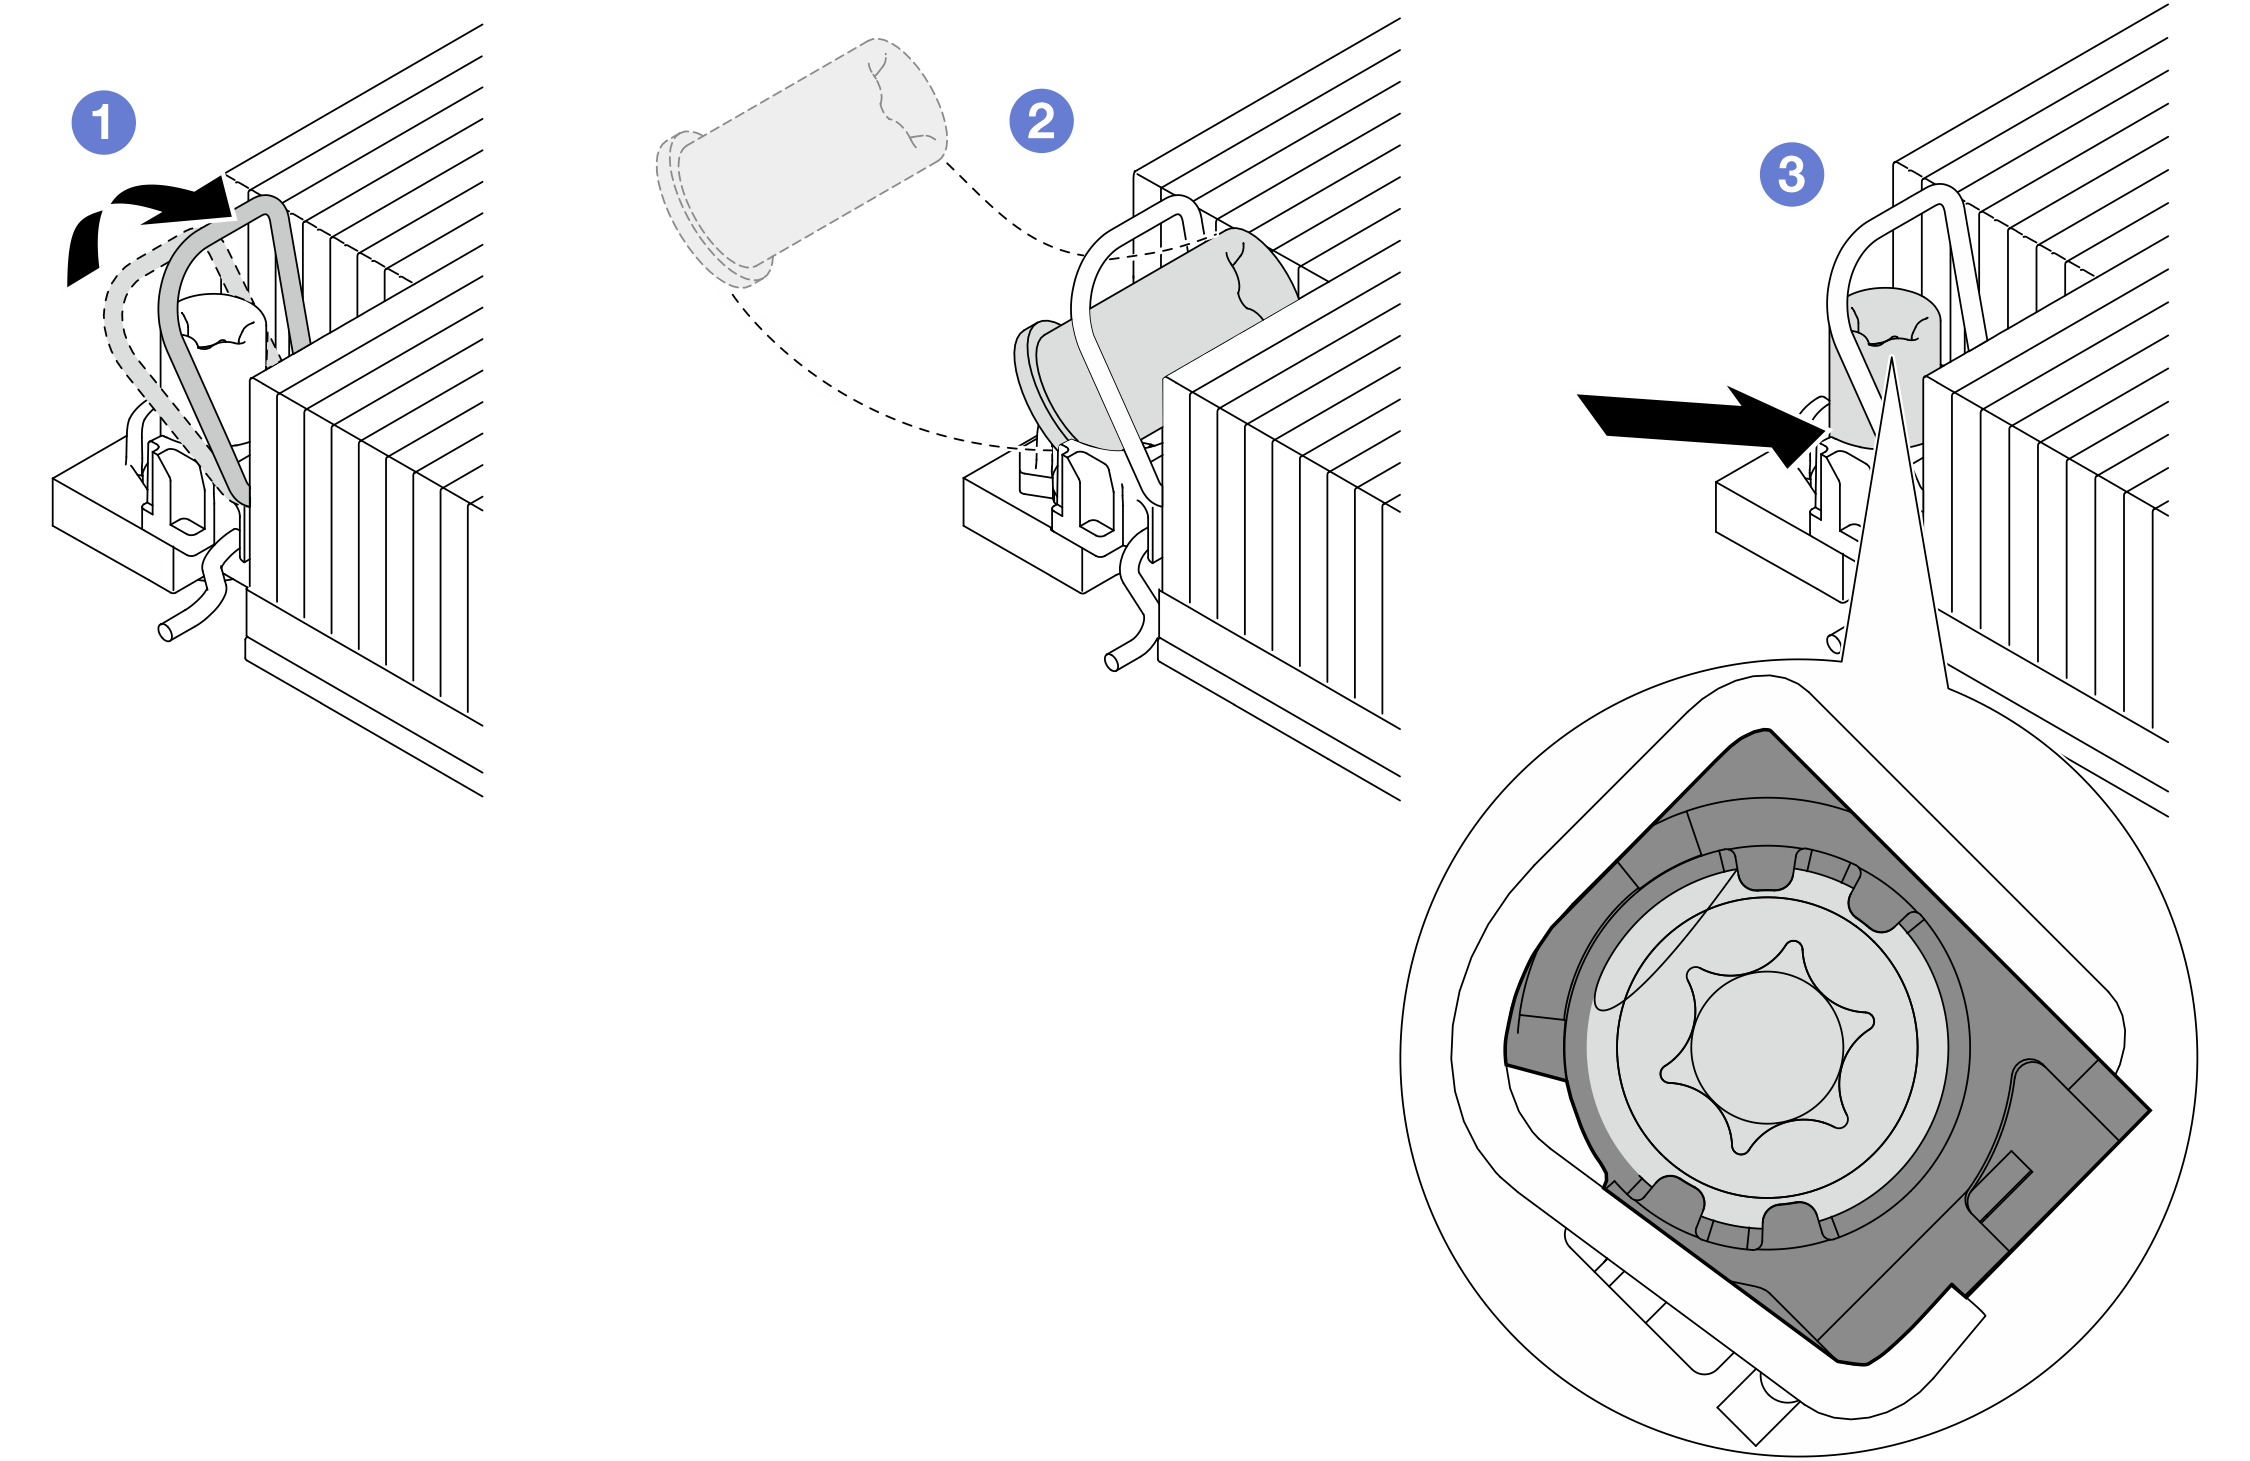 Installing a Torx T30 nut into the heat sink